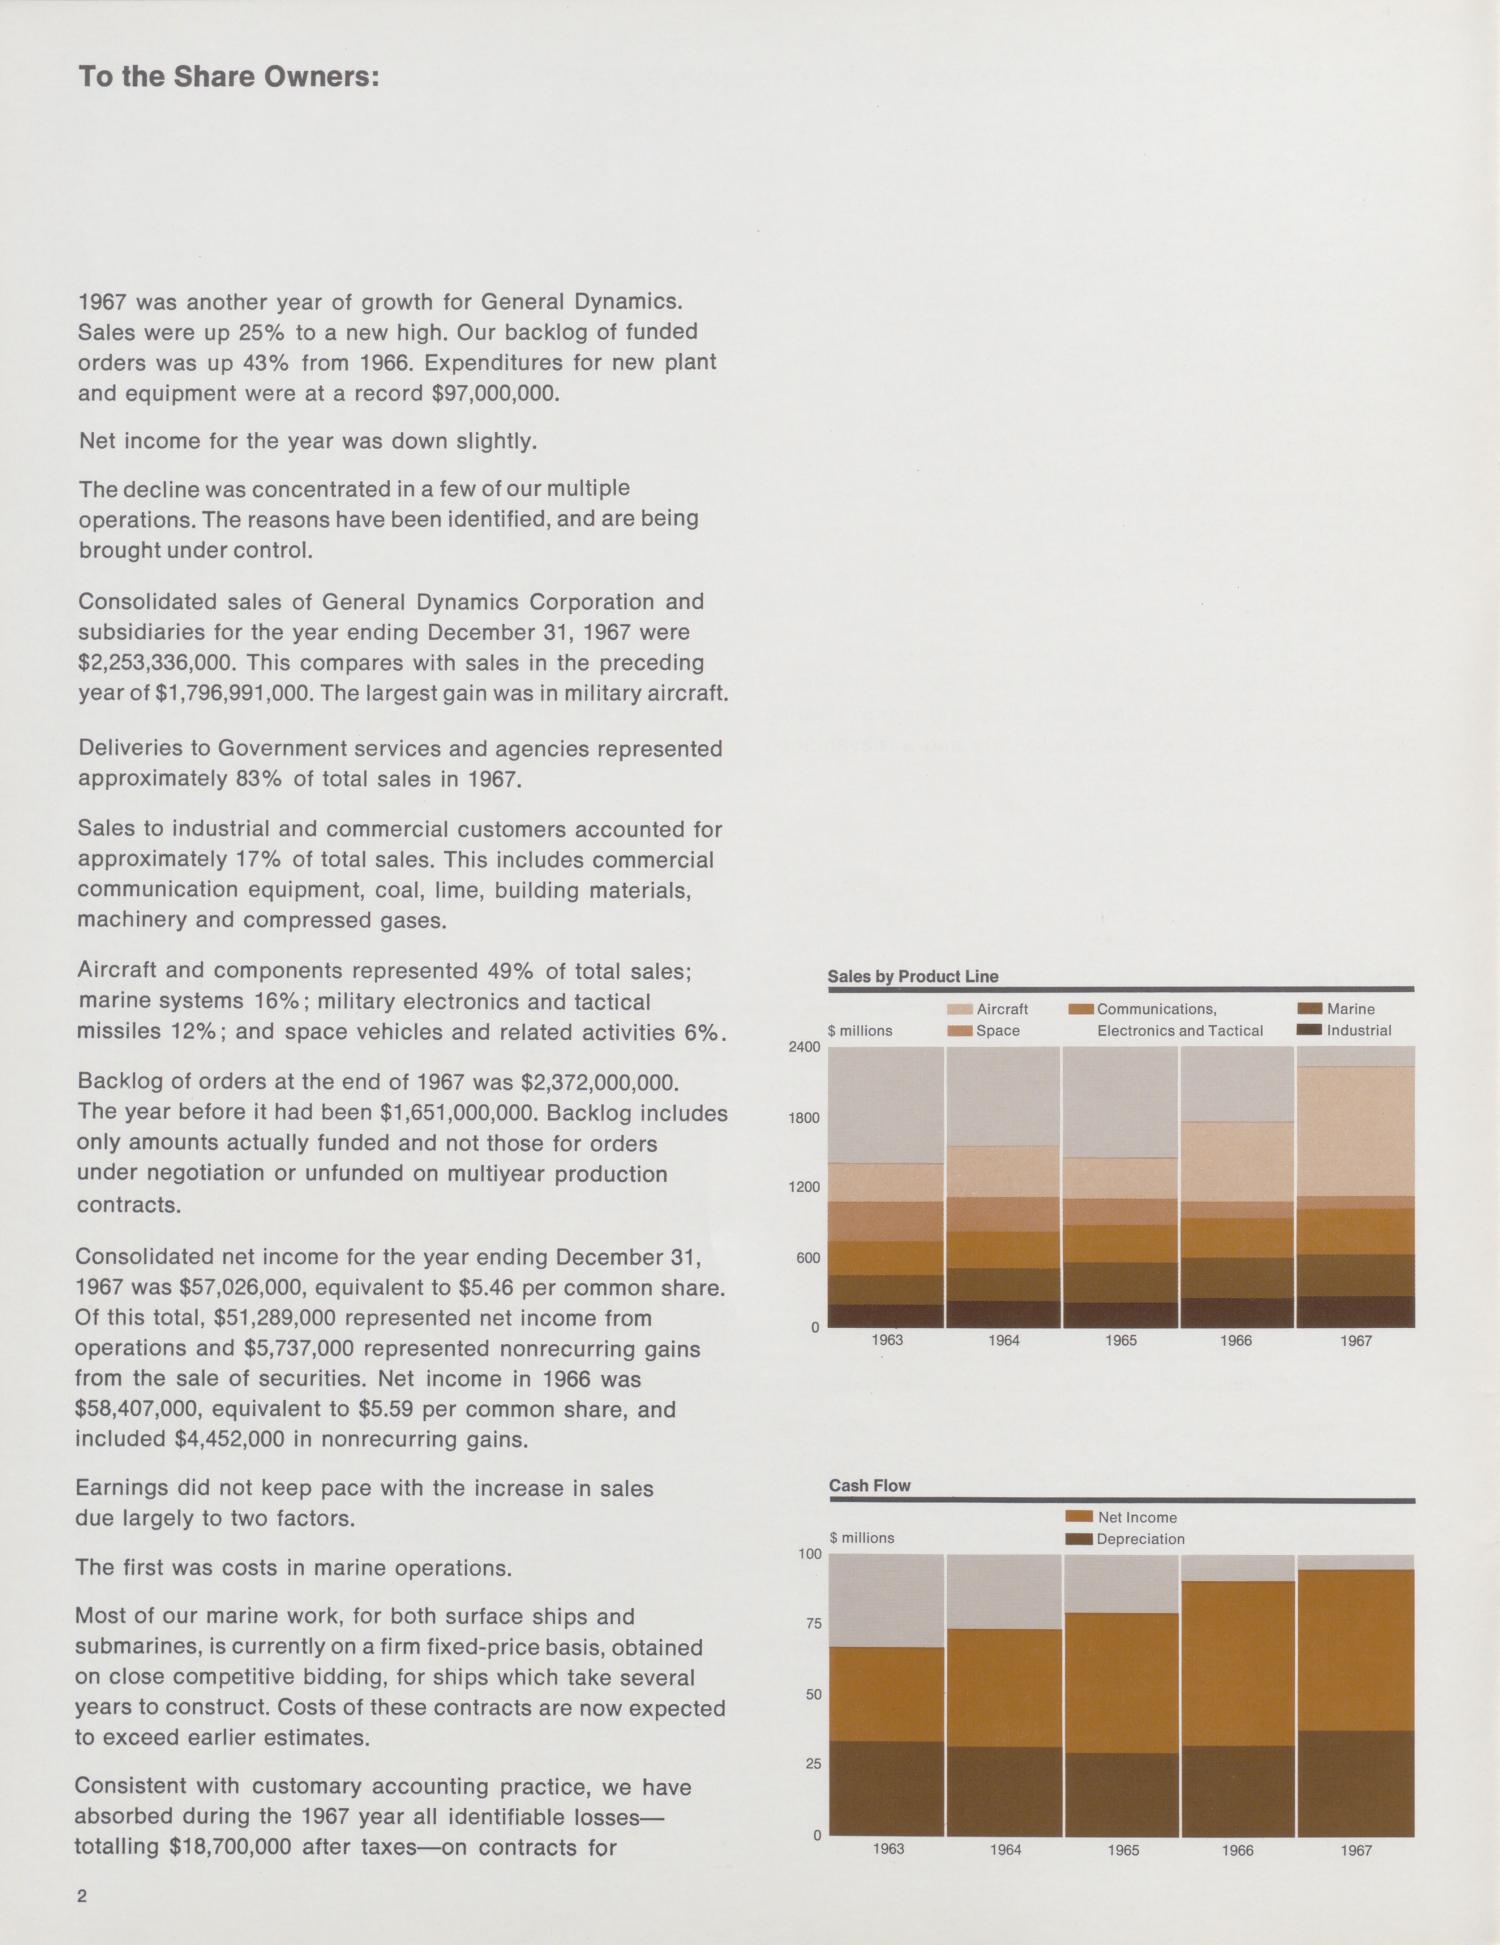 General Dynamics Annual Report: 1967
                                                
                                                    2
                                                